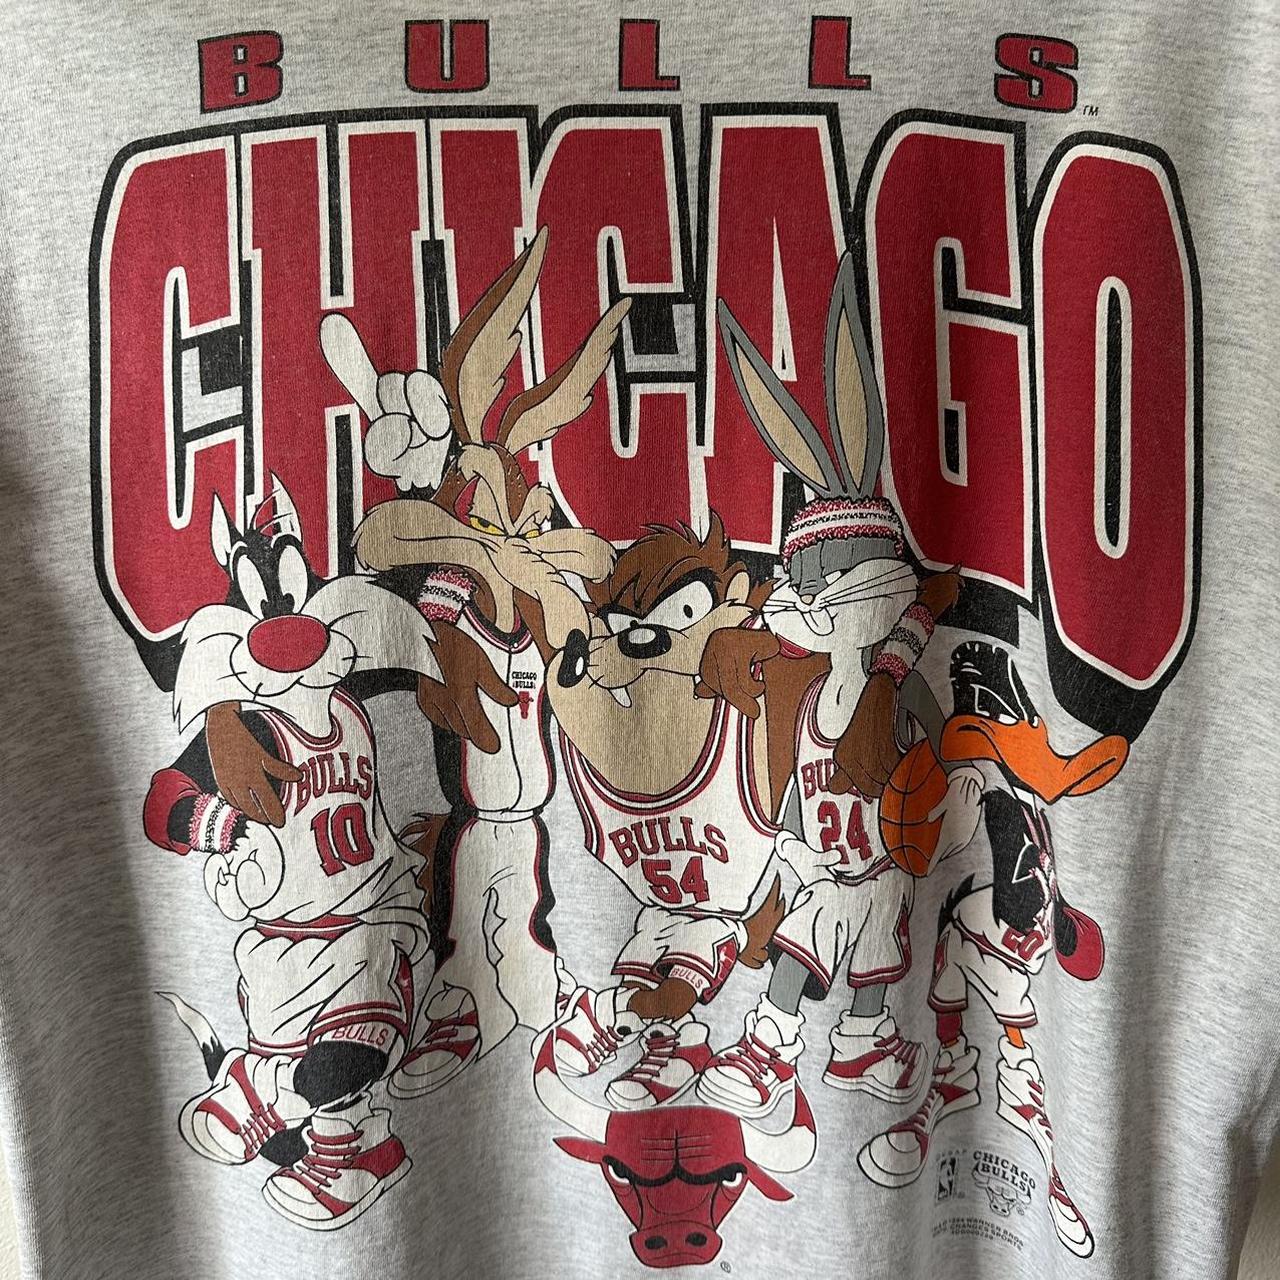 Shirts  Vintage Chicago Bulls Looney Tunes Shirt Chicago Bulls